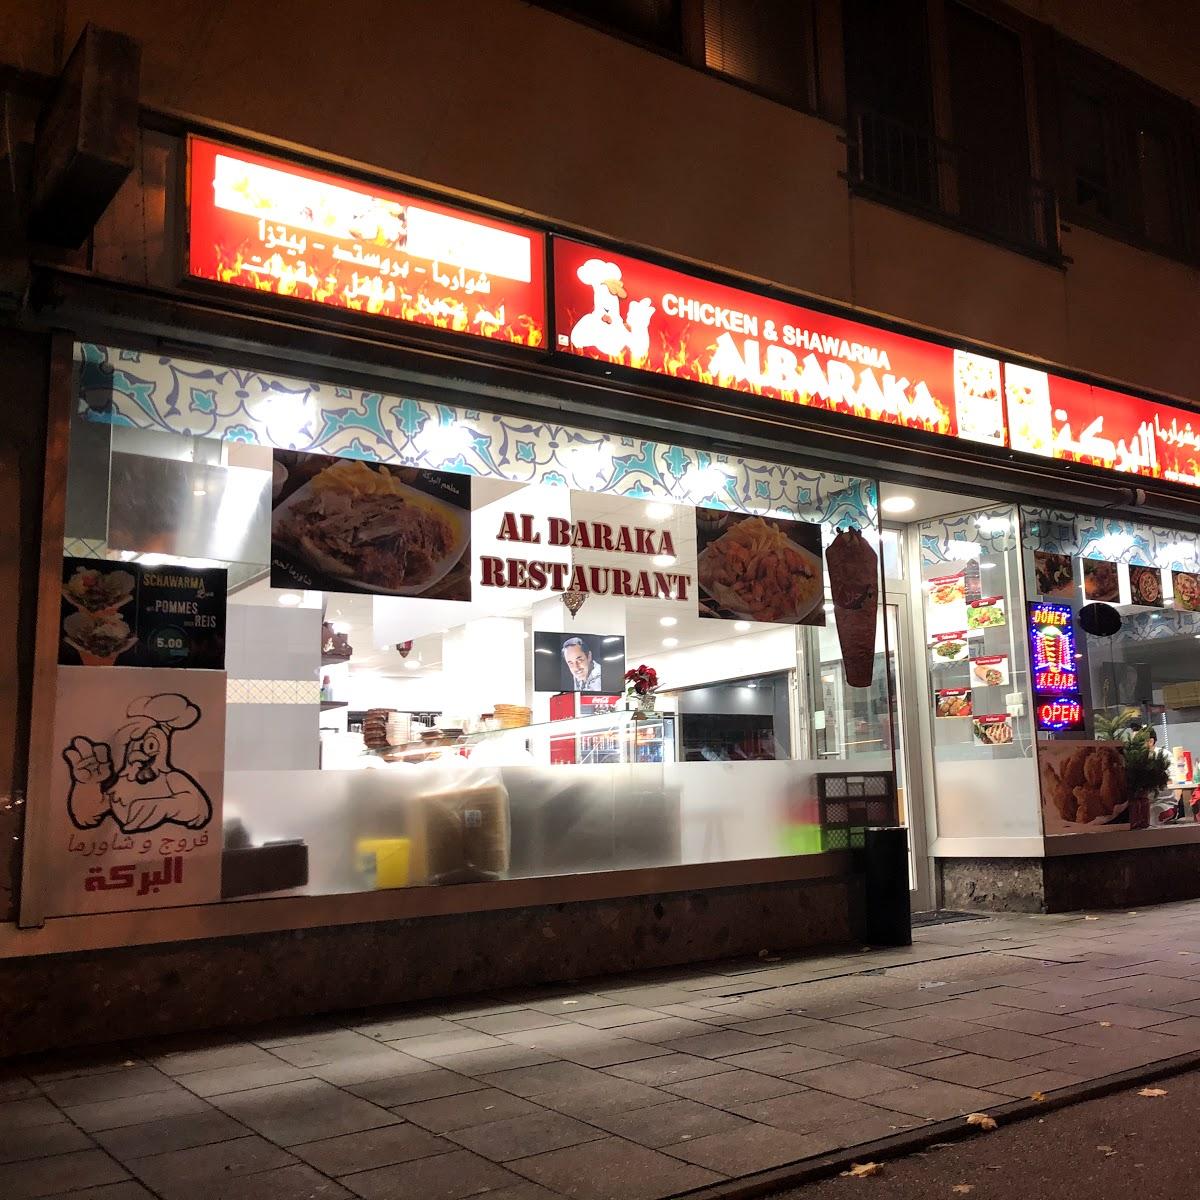 Restaurant "Broasted and Shawarma Al Baraka" in München